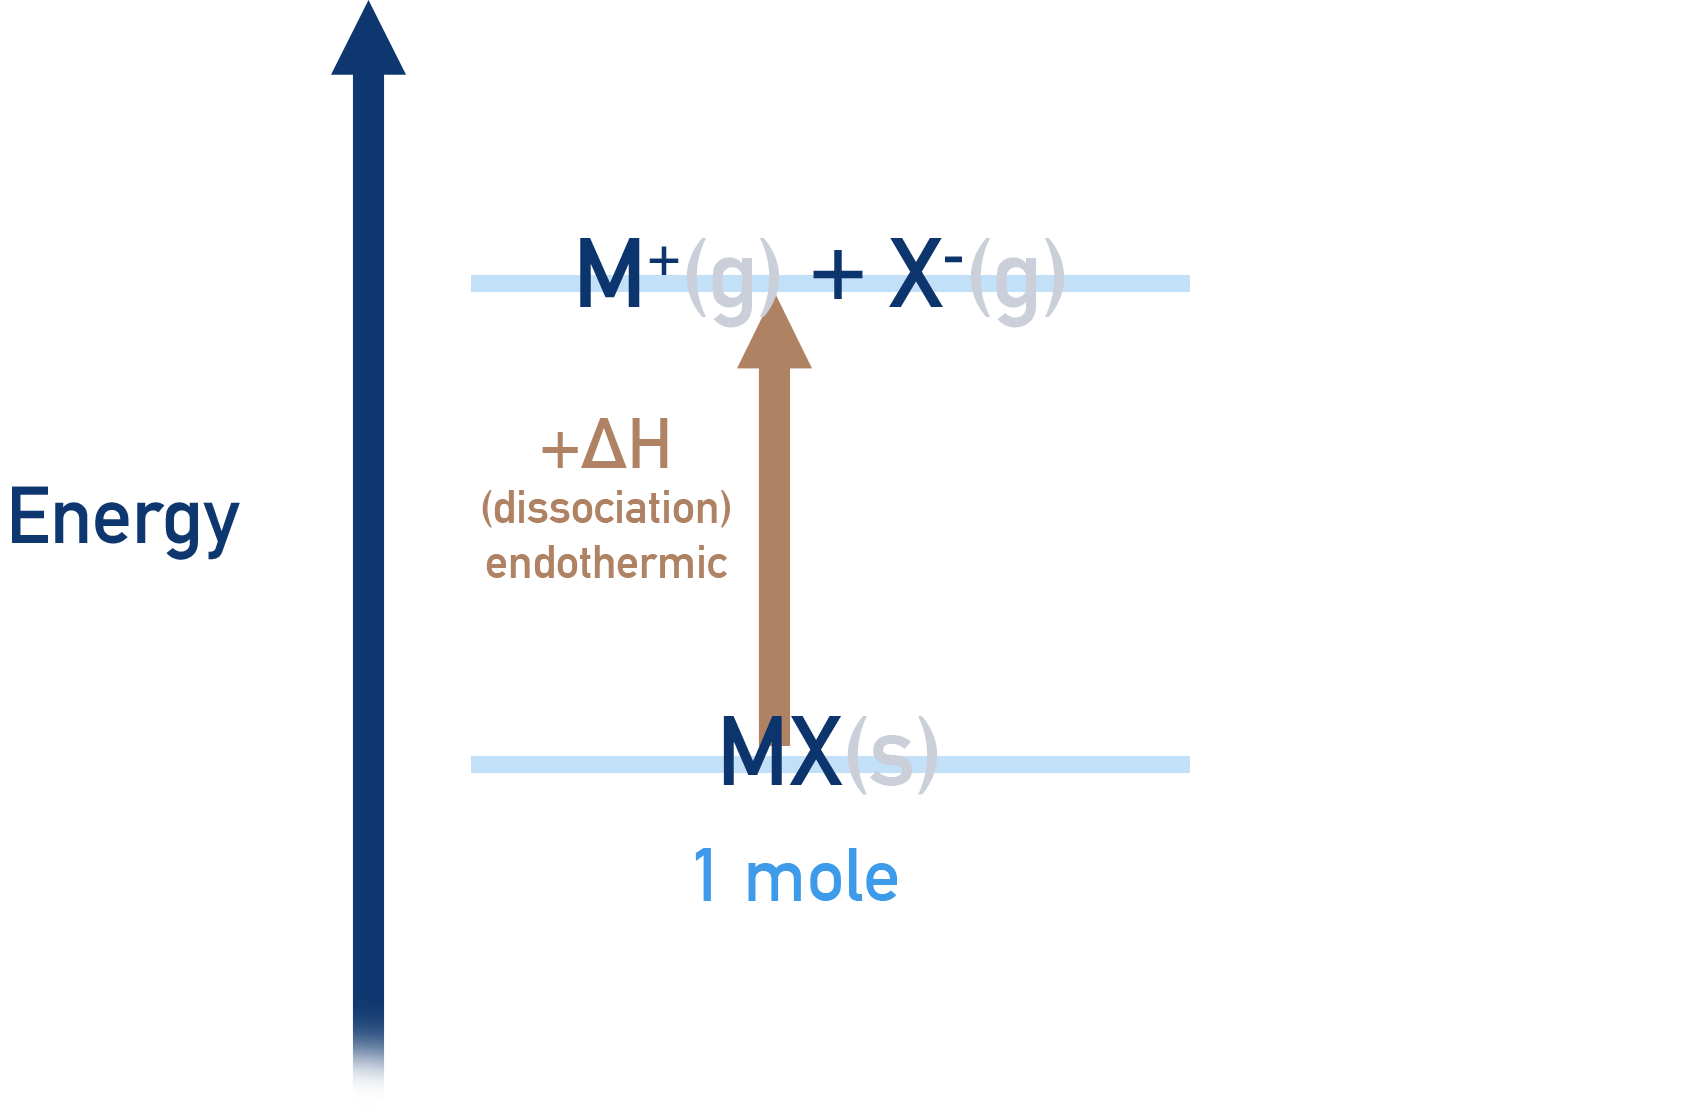 lattice enthalpy of dissociation endothermic a-level chemistry